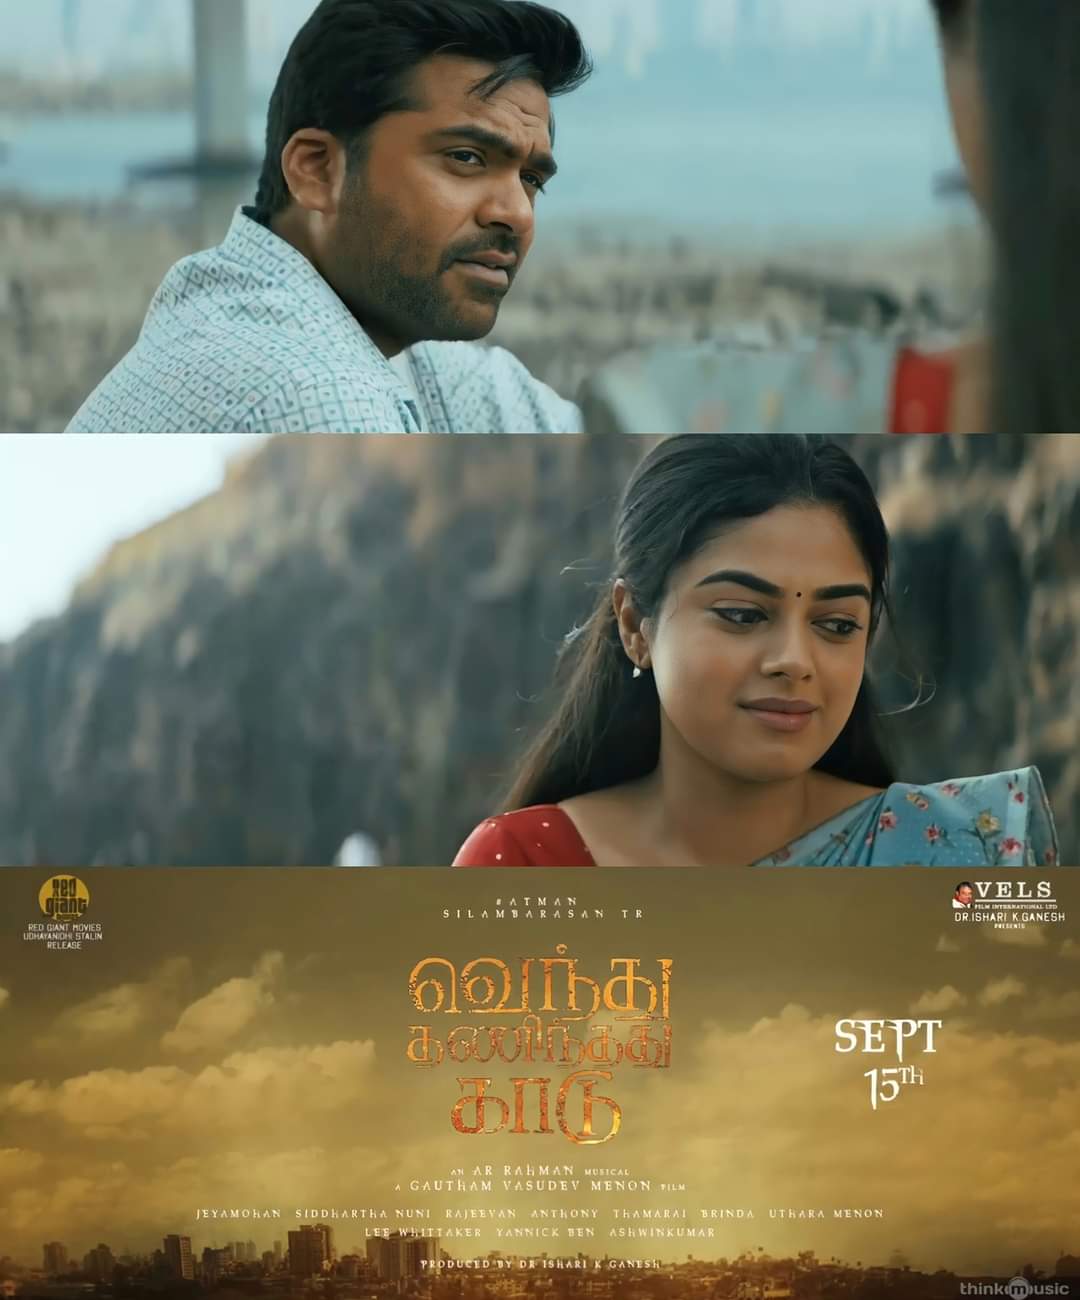 Silambarasan TR Venthu Thaninthathu Kaadu Movie Trailer Release Update